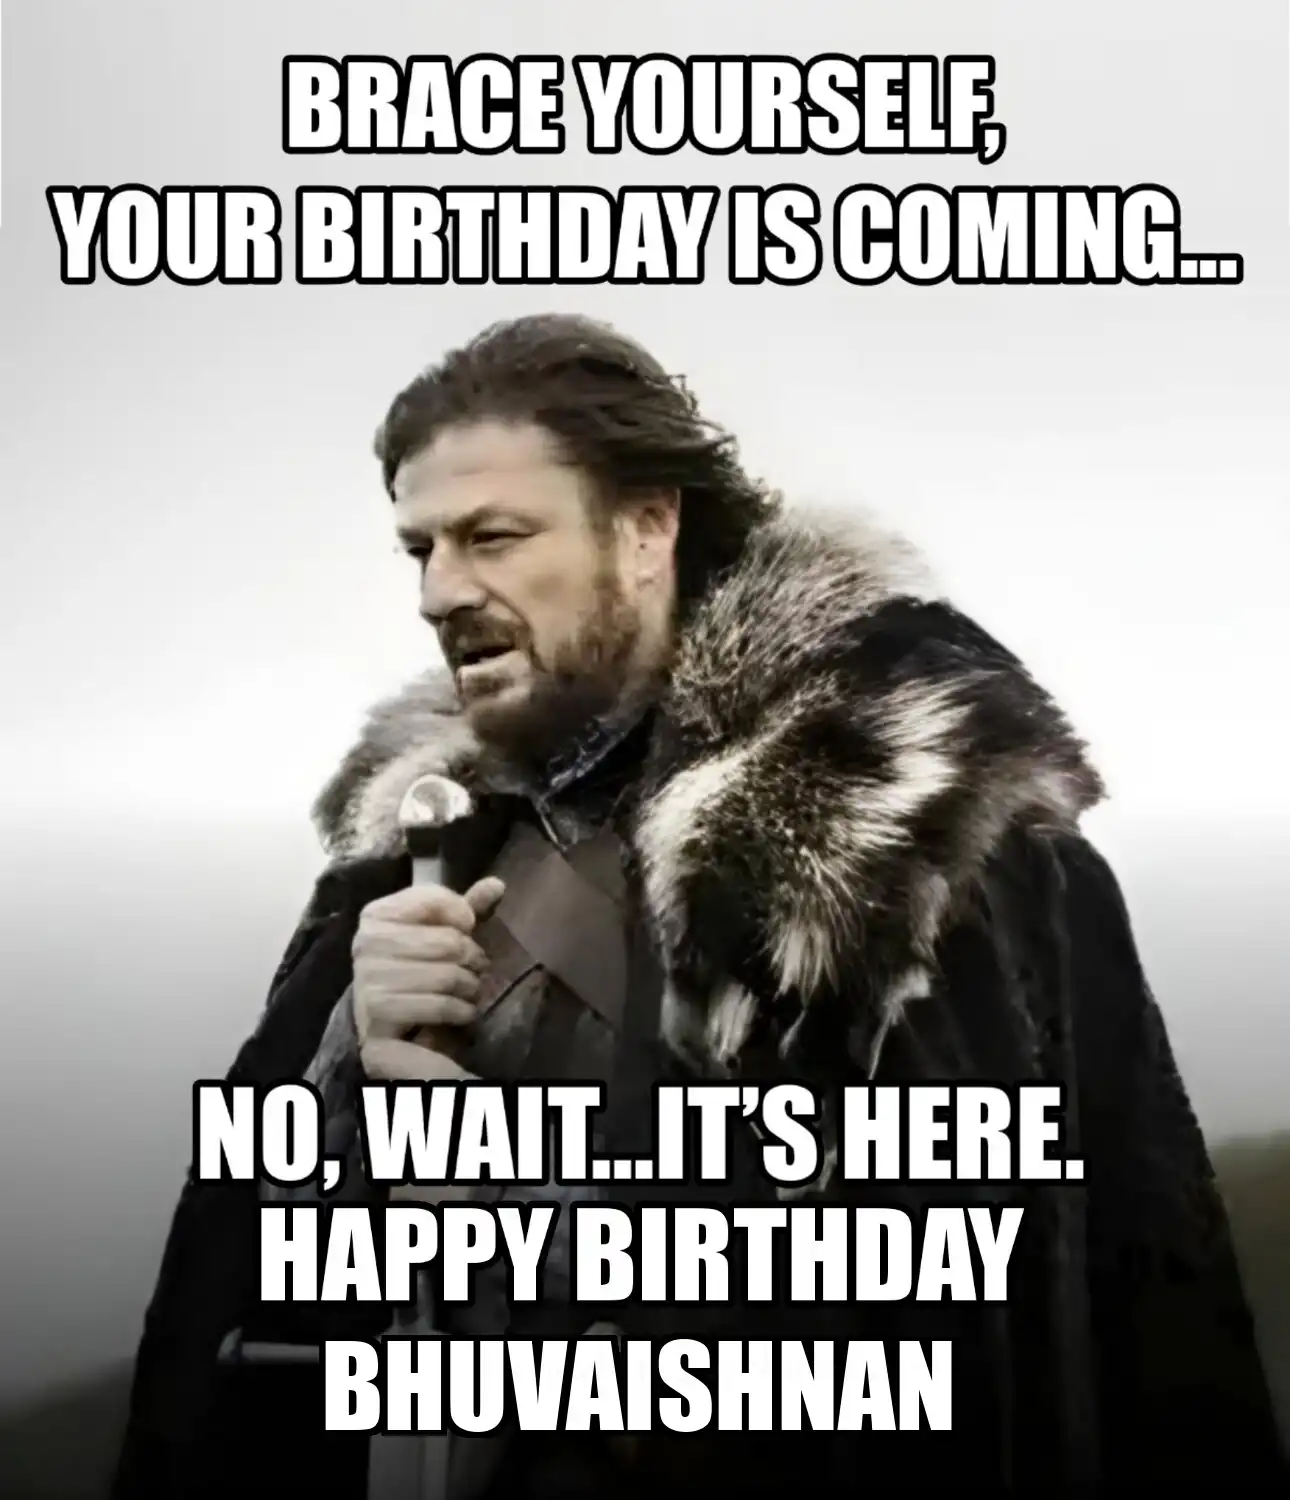 Happy Birthday Bhuvaishnan Brace Yourself Your Birthday Is Coming Meme